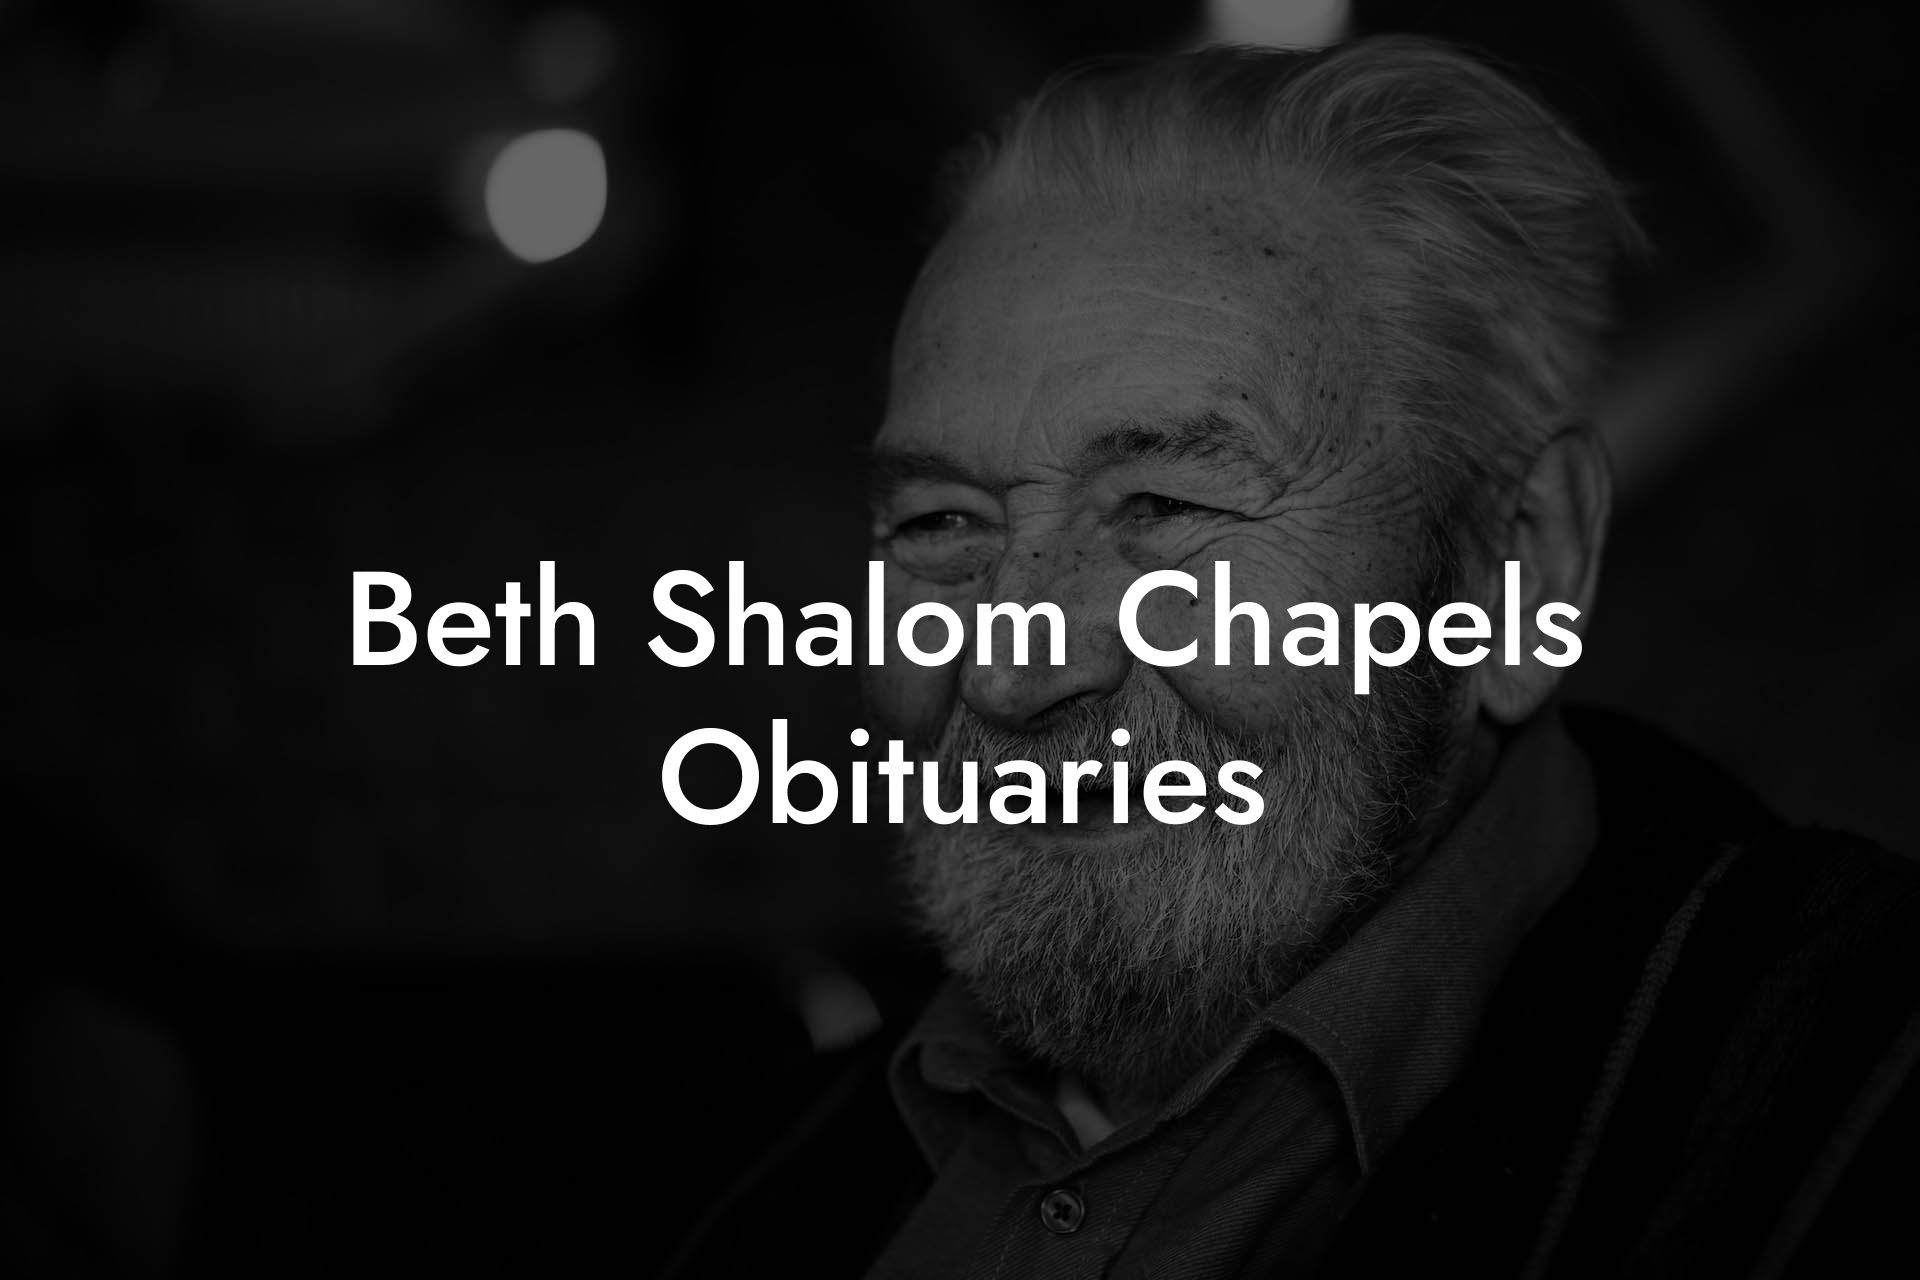 Beth Shalom Chapels Obituaries